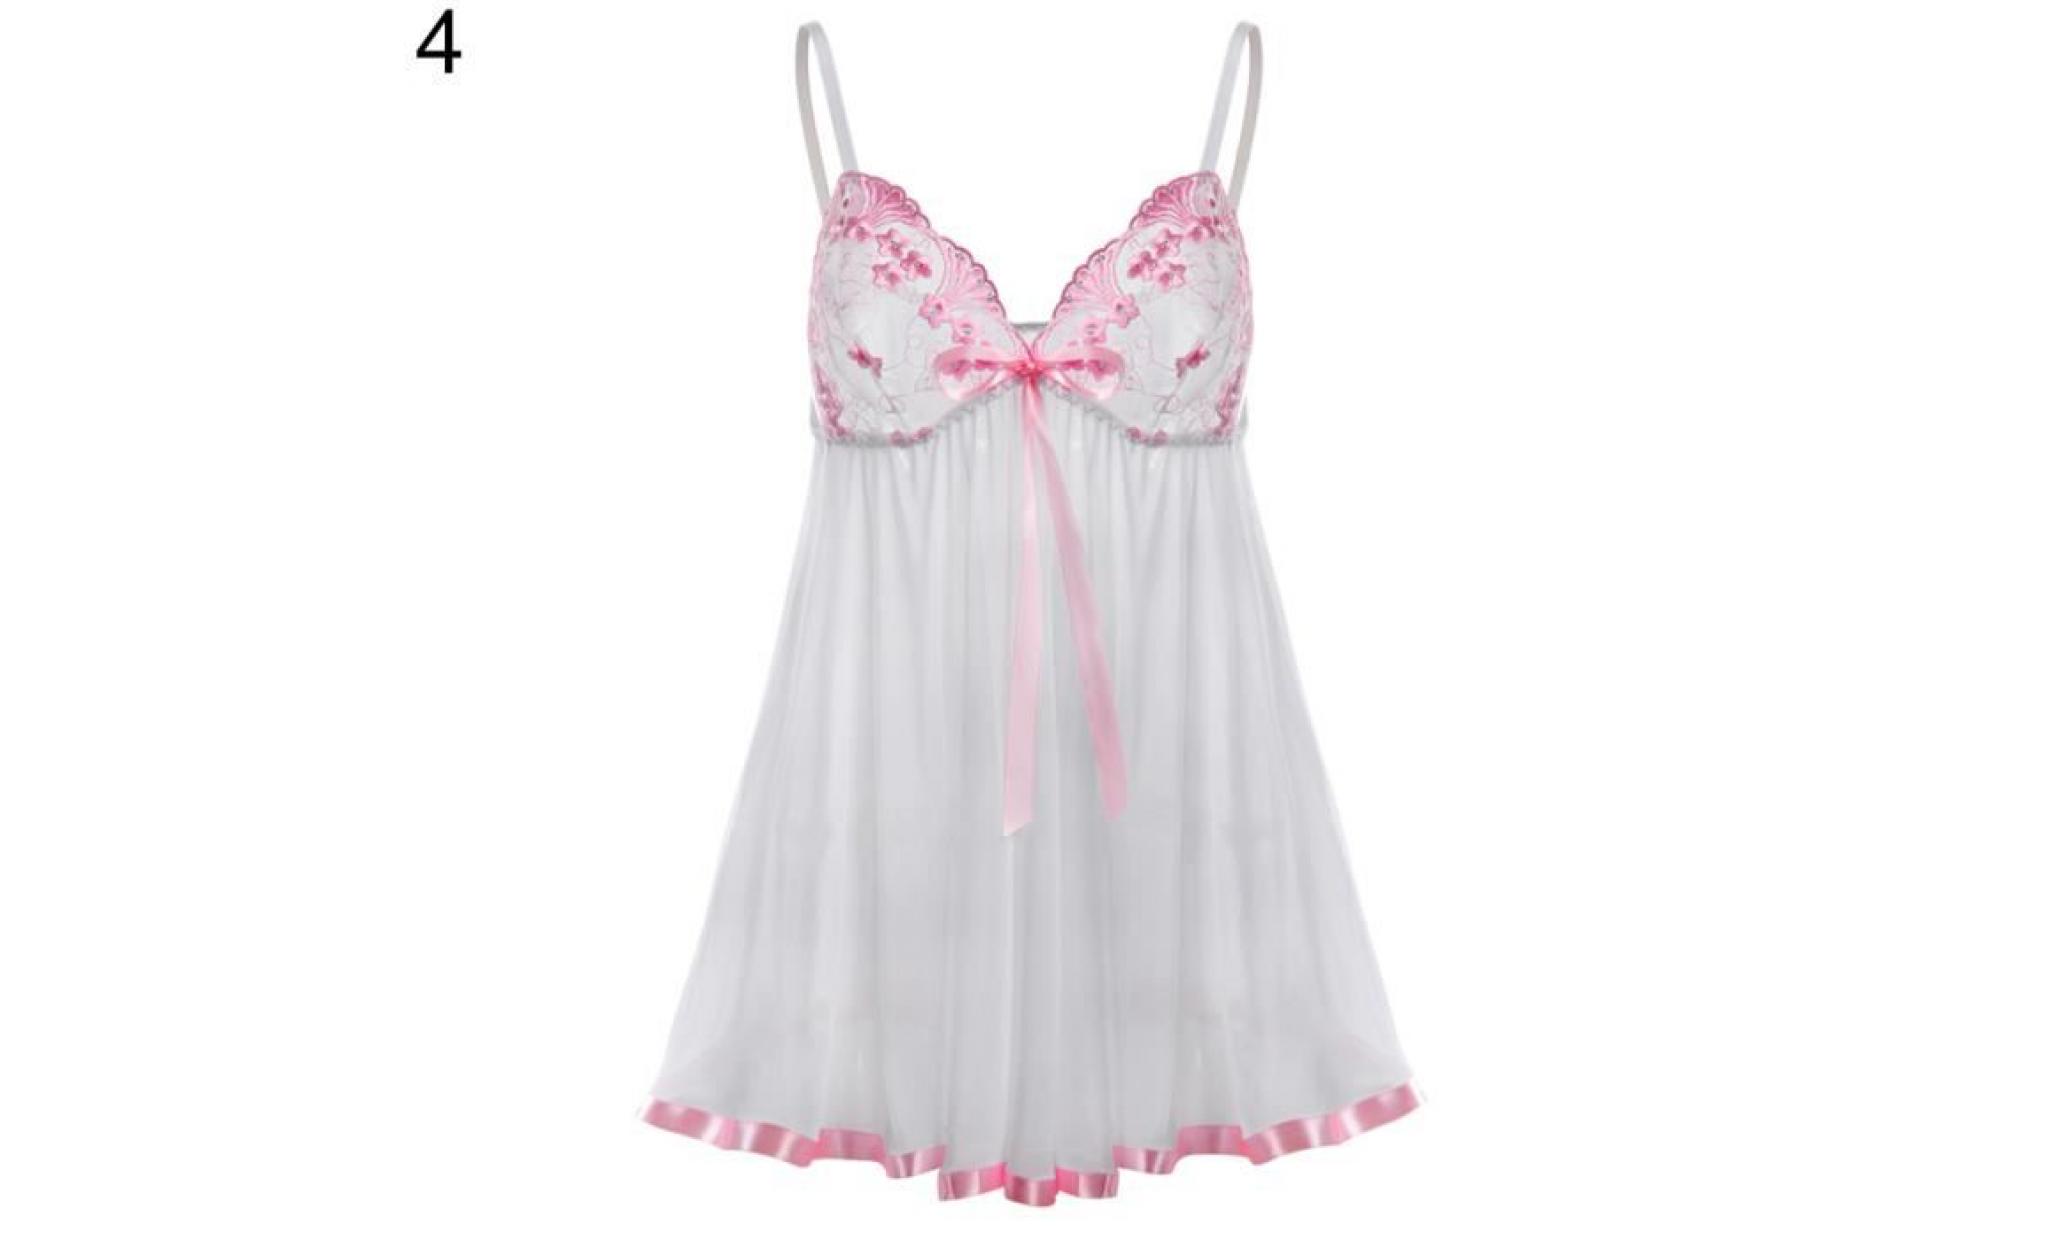 robe en dentelle transparente transparente à manches élastiques pour femmes throng sleepwear nightwear pink & white xxl